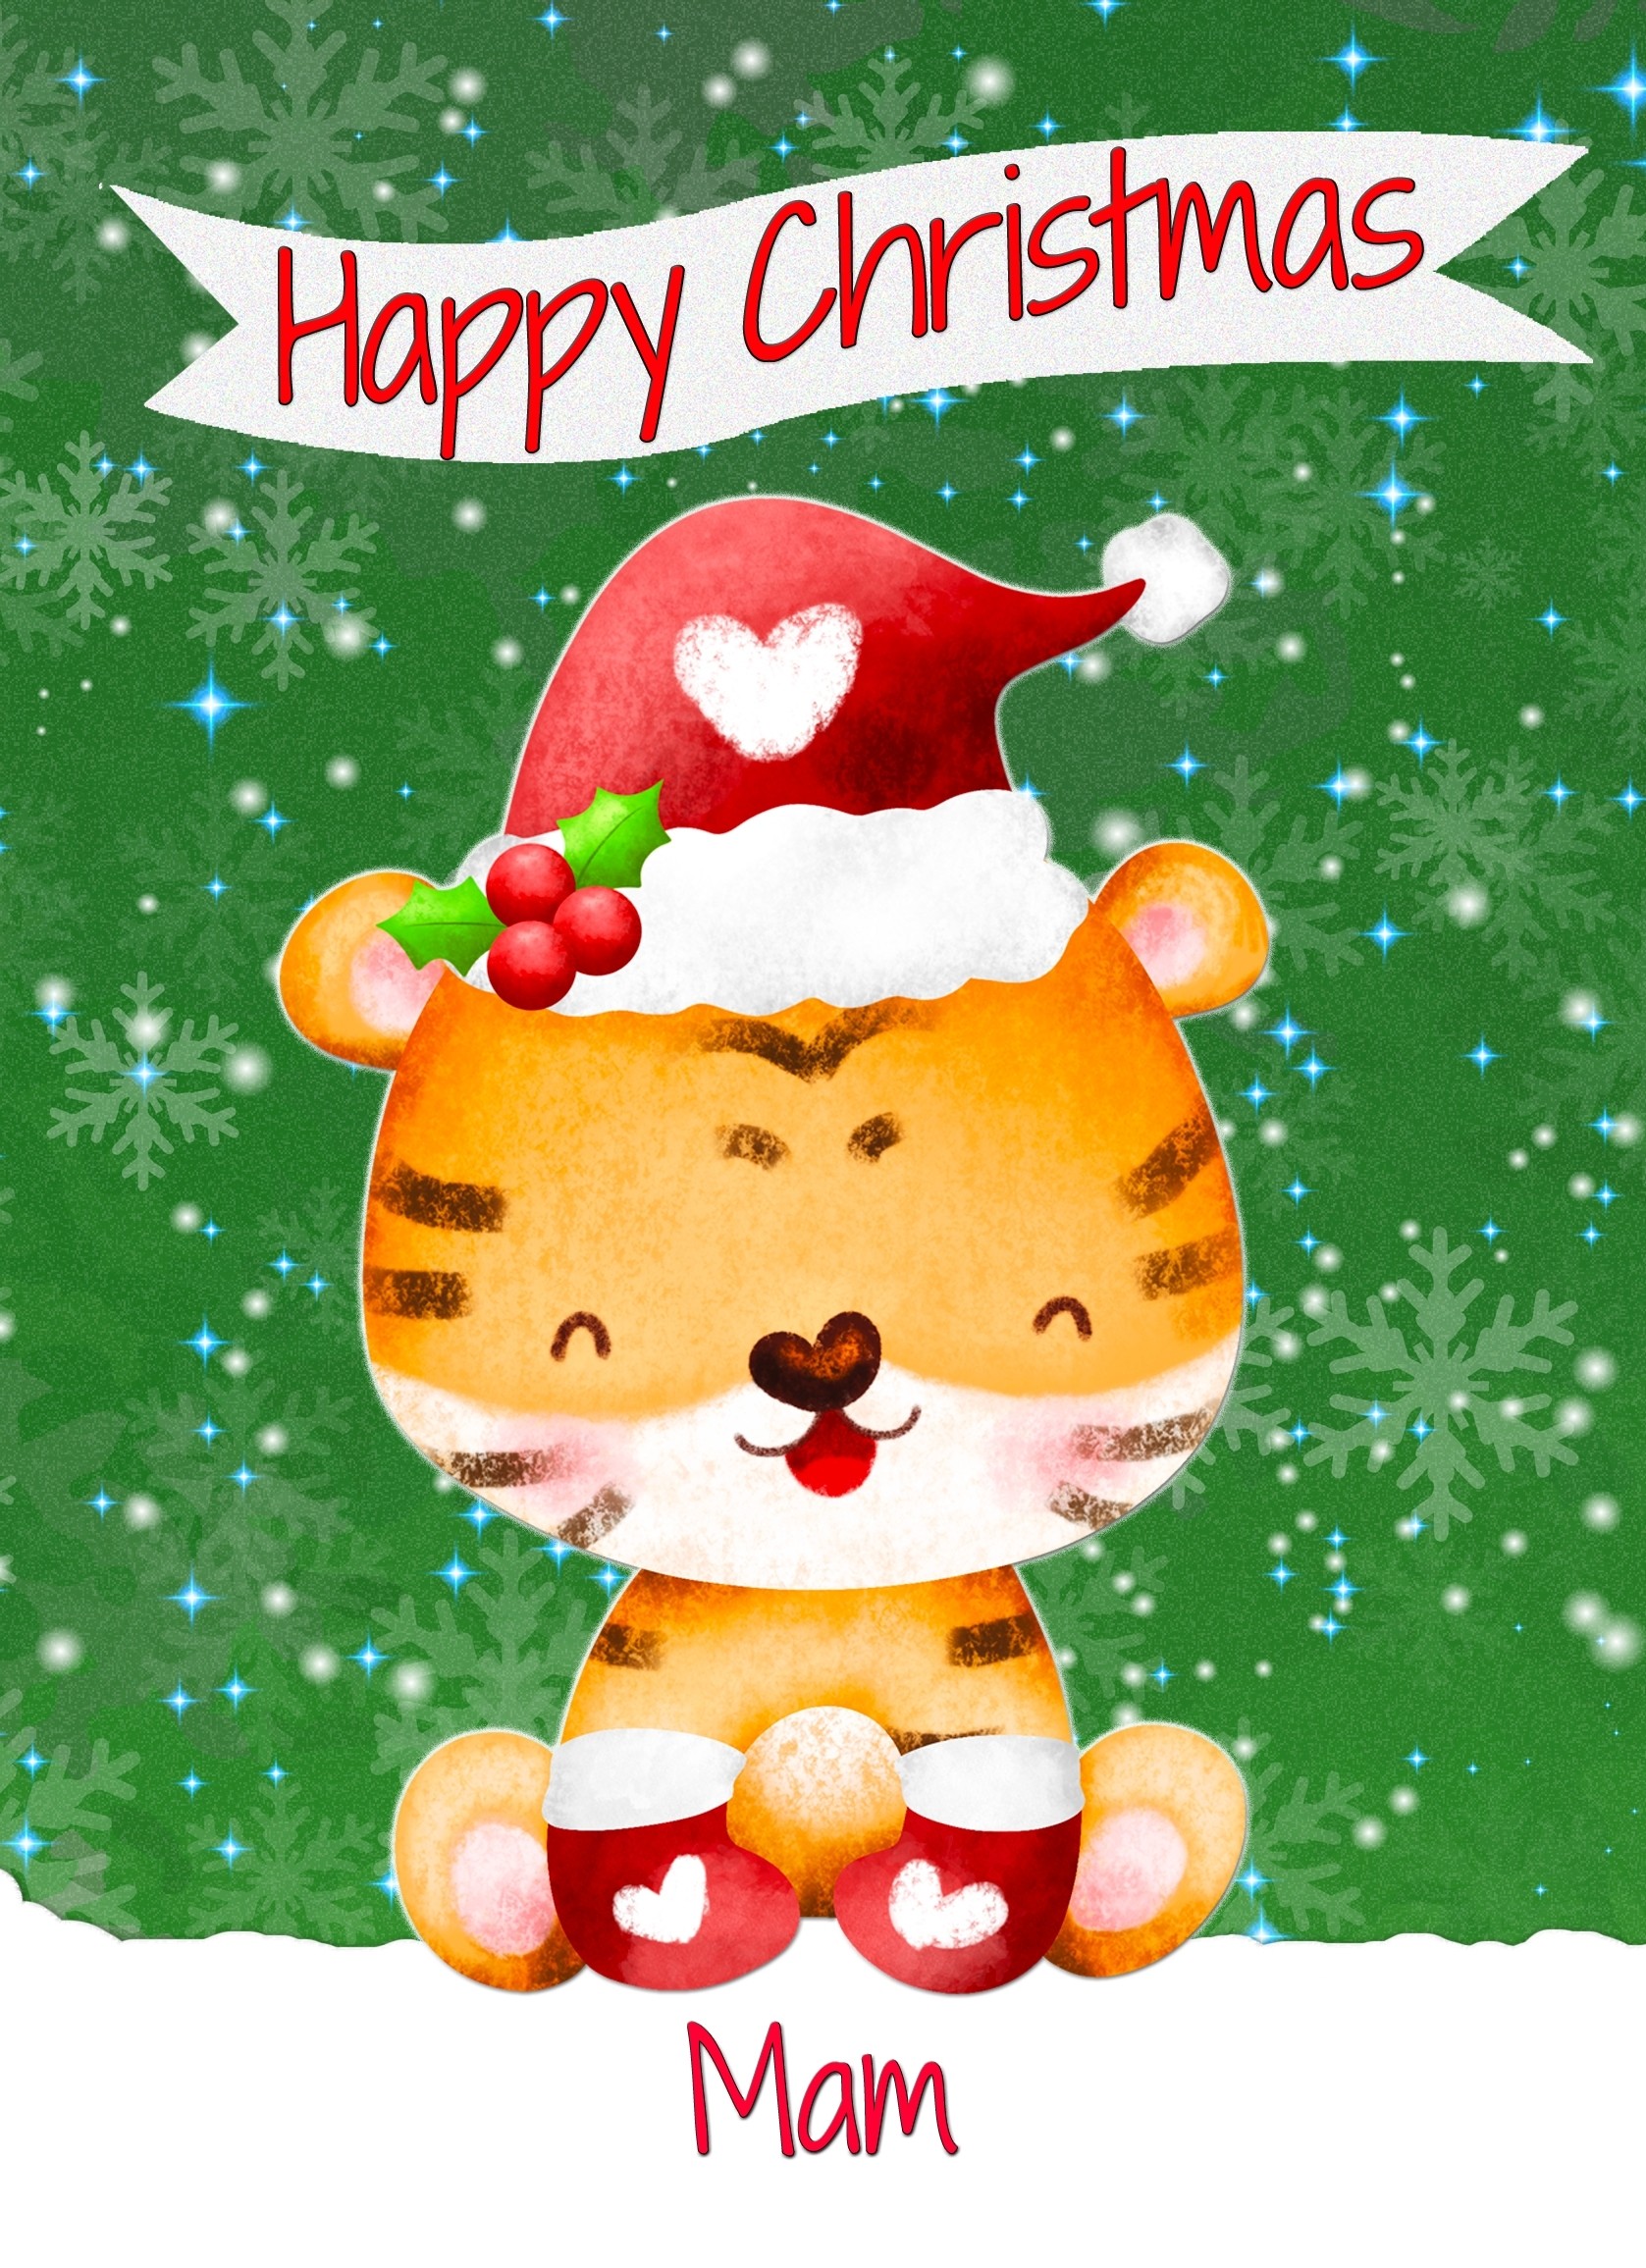 Christmas Card For Mam (Happy Christmas, Tiger)